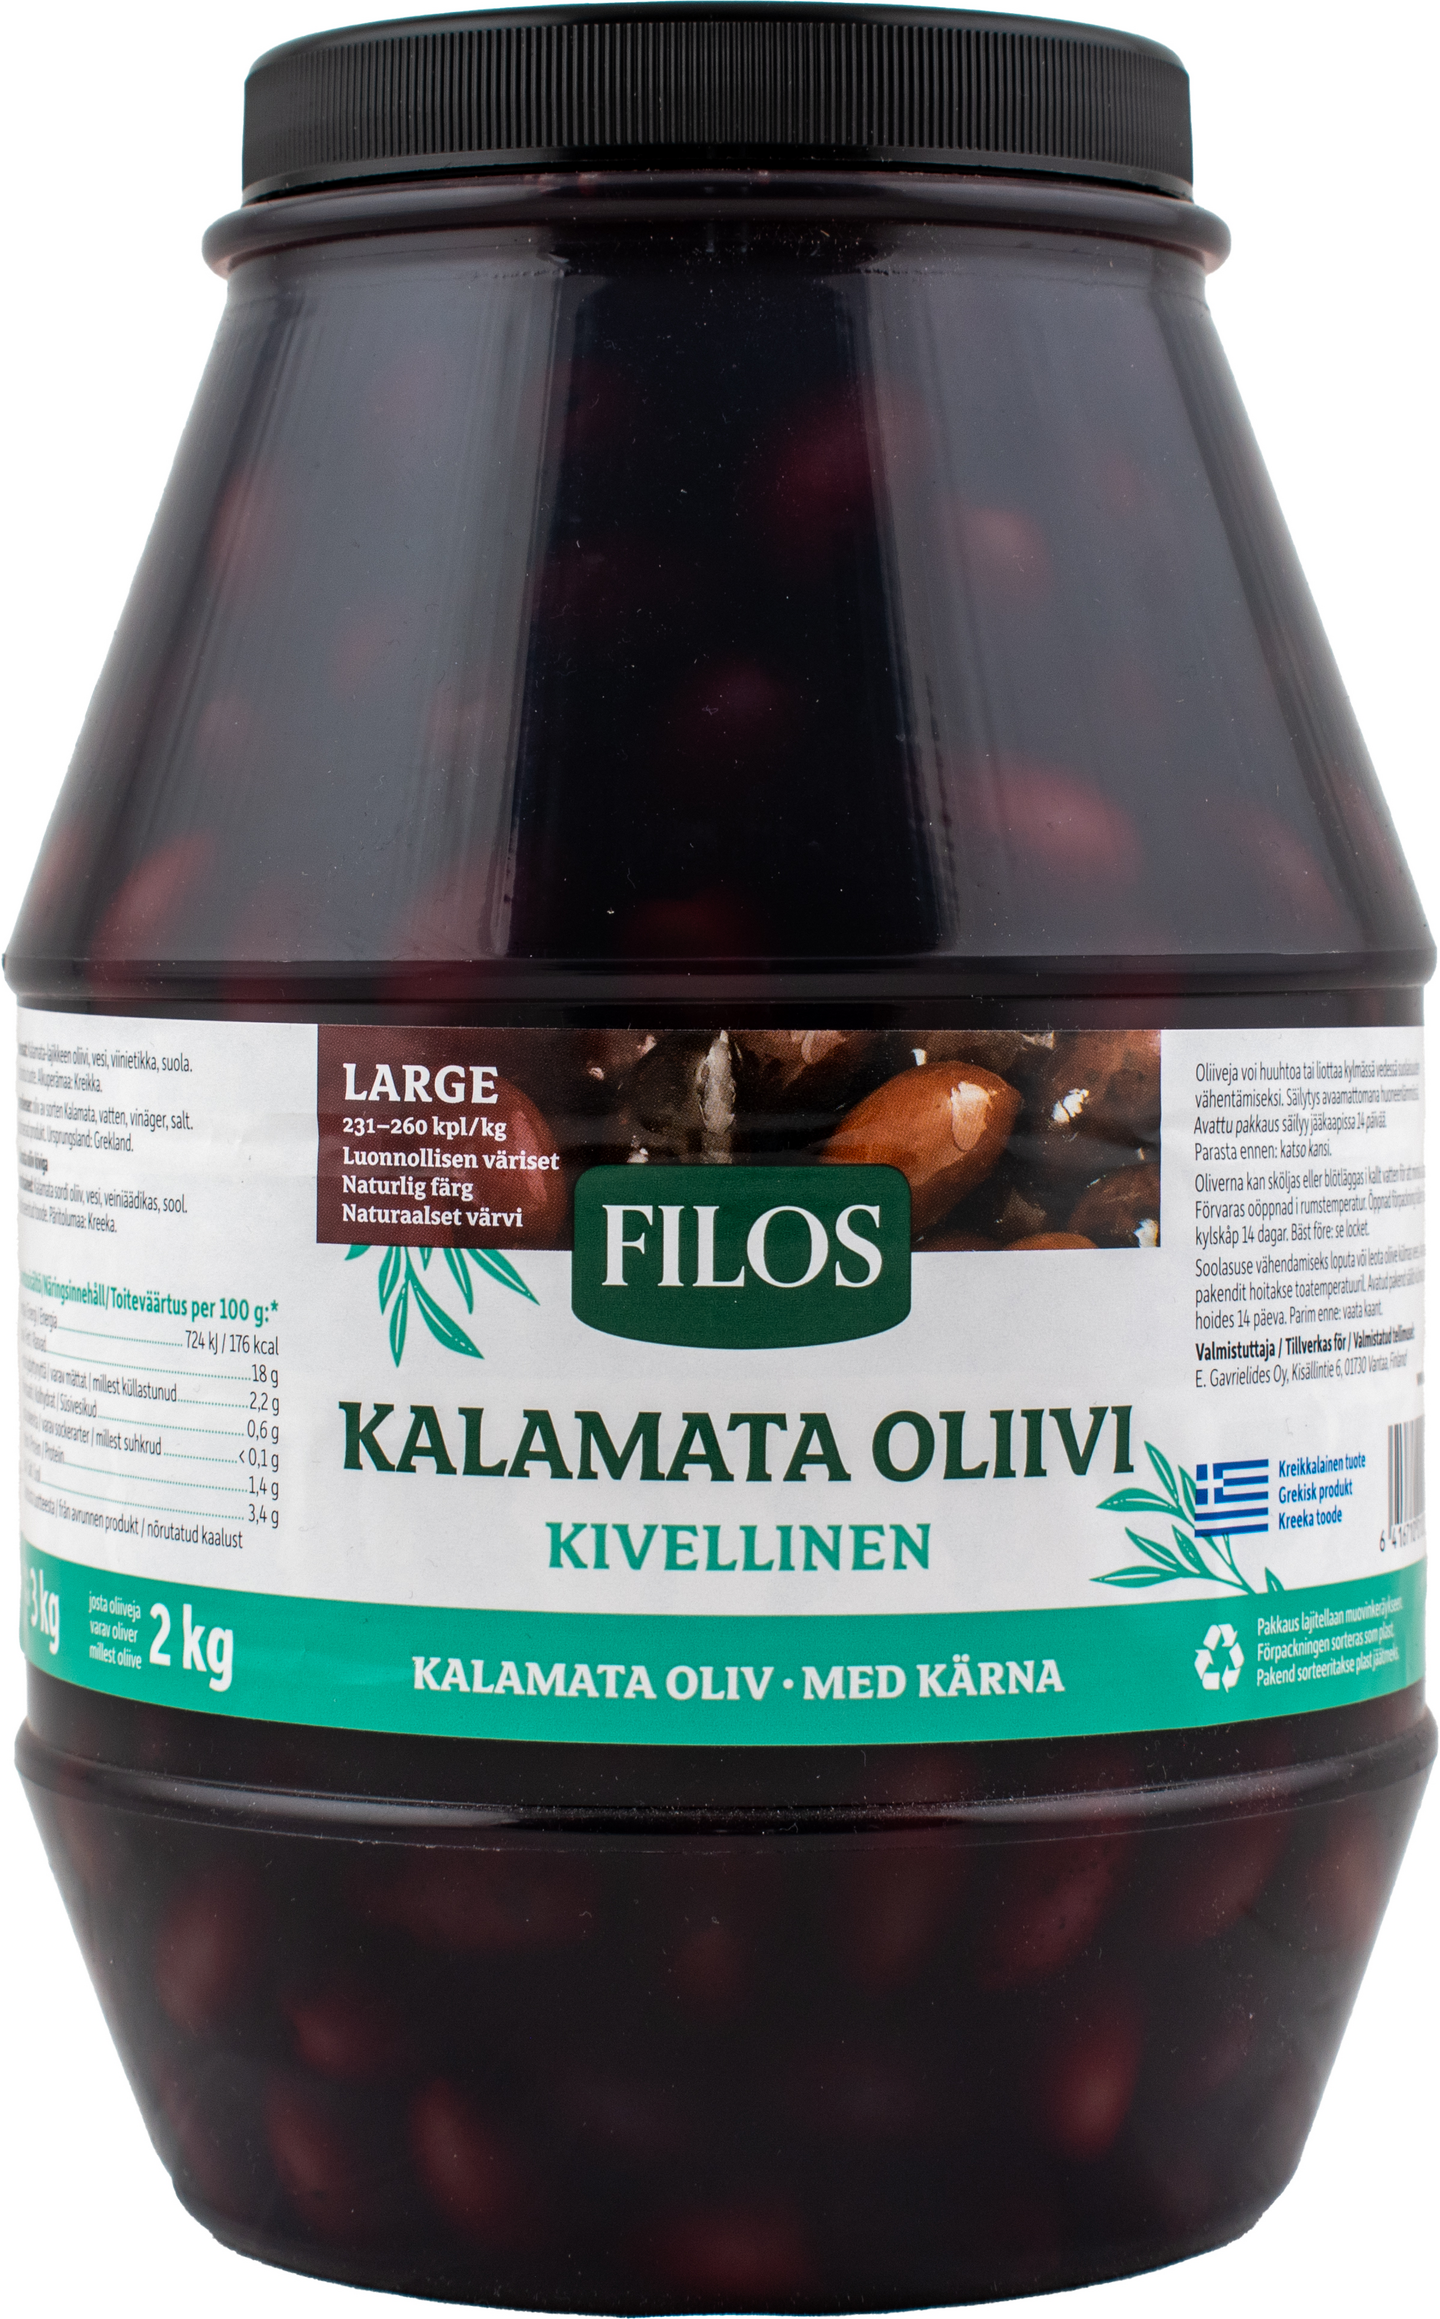 Filos Kalamon oliivi kivellinen large 3/2kg